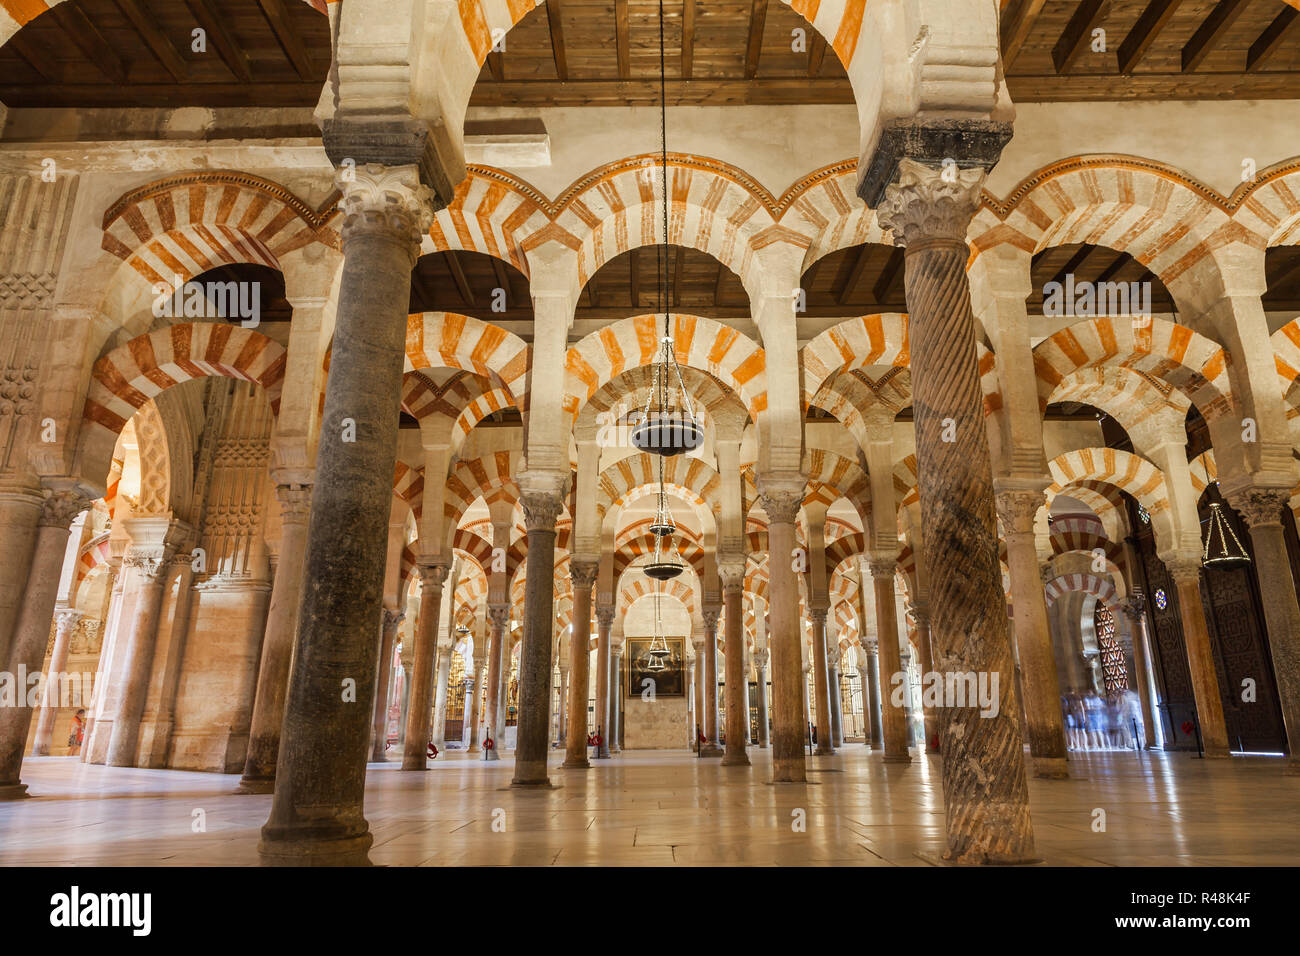 Mosque-Cathedral de Cordoba Banque D'Images